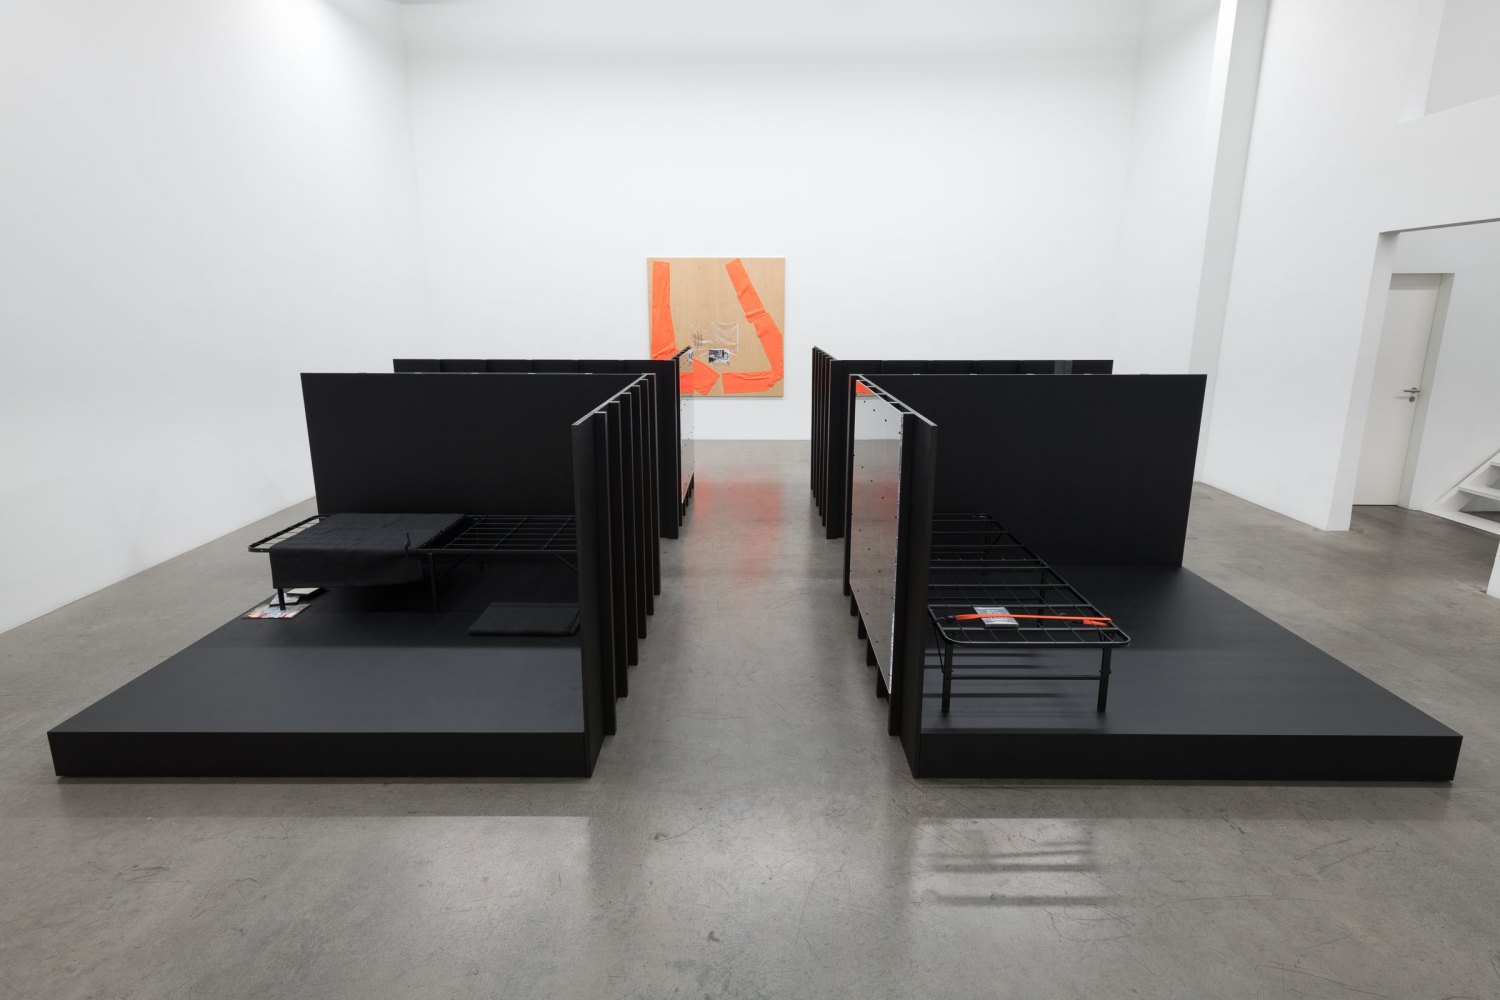 Installation view, Tom Burr, Compressions, Galerie Neu, 2022